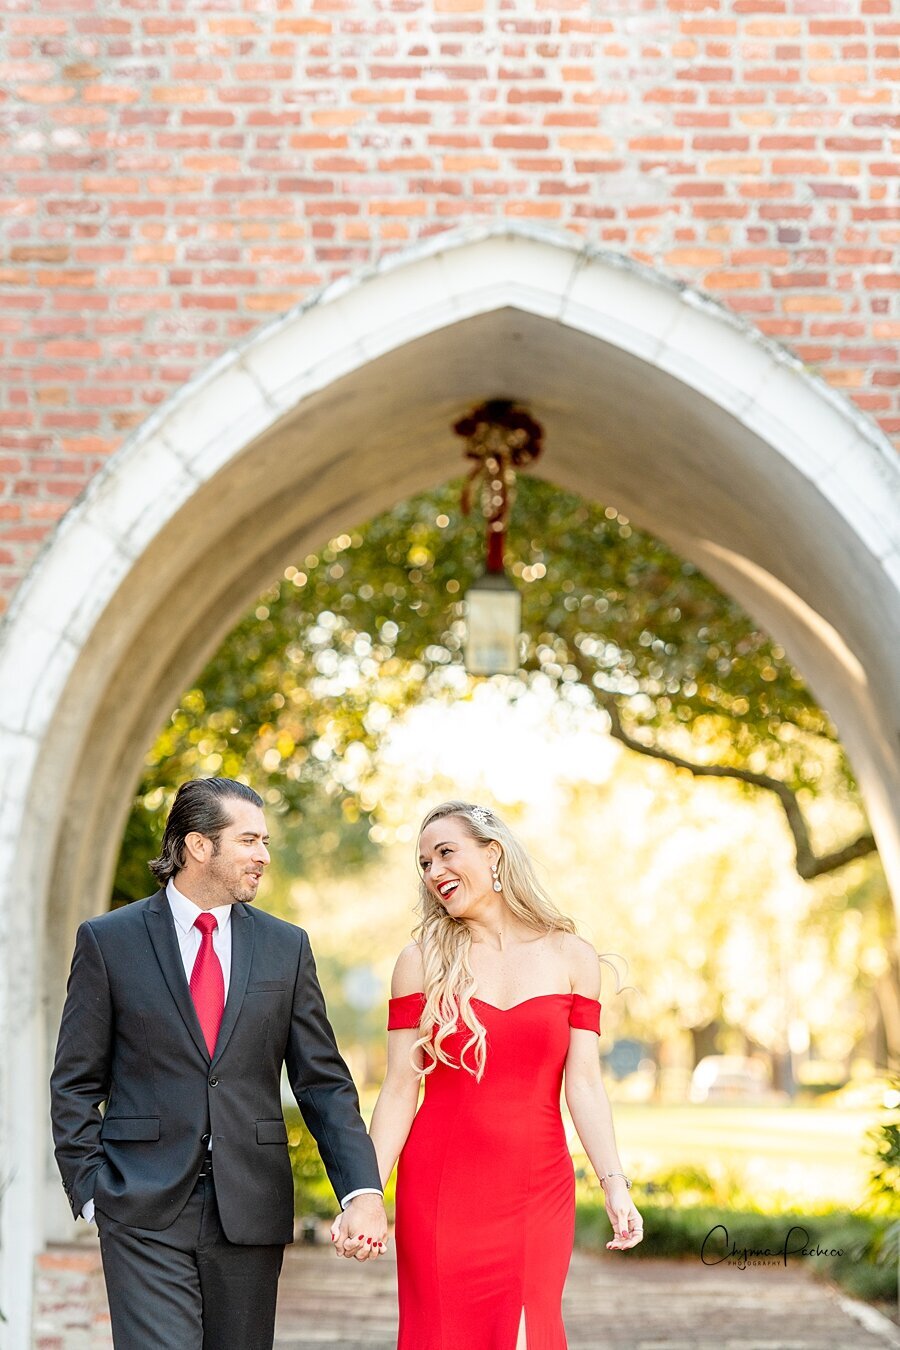 Dreamy Engagement Photos | Florida Wedding Photographer | Chynna Pacheco Photography